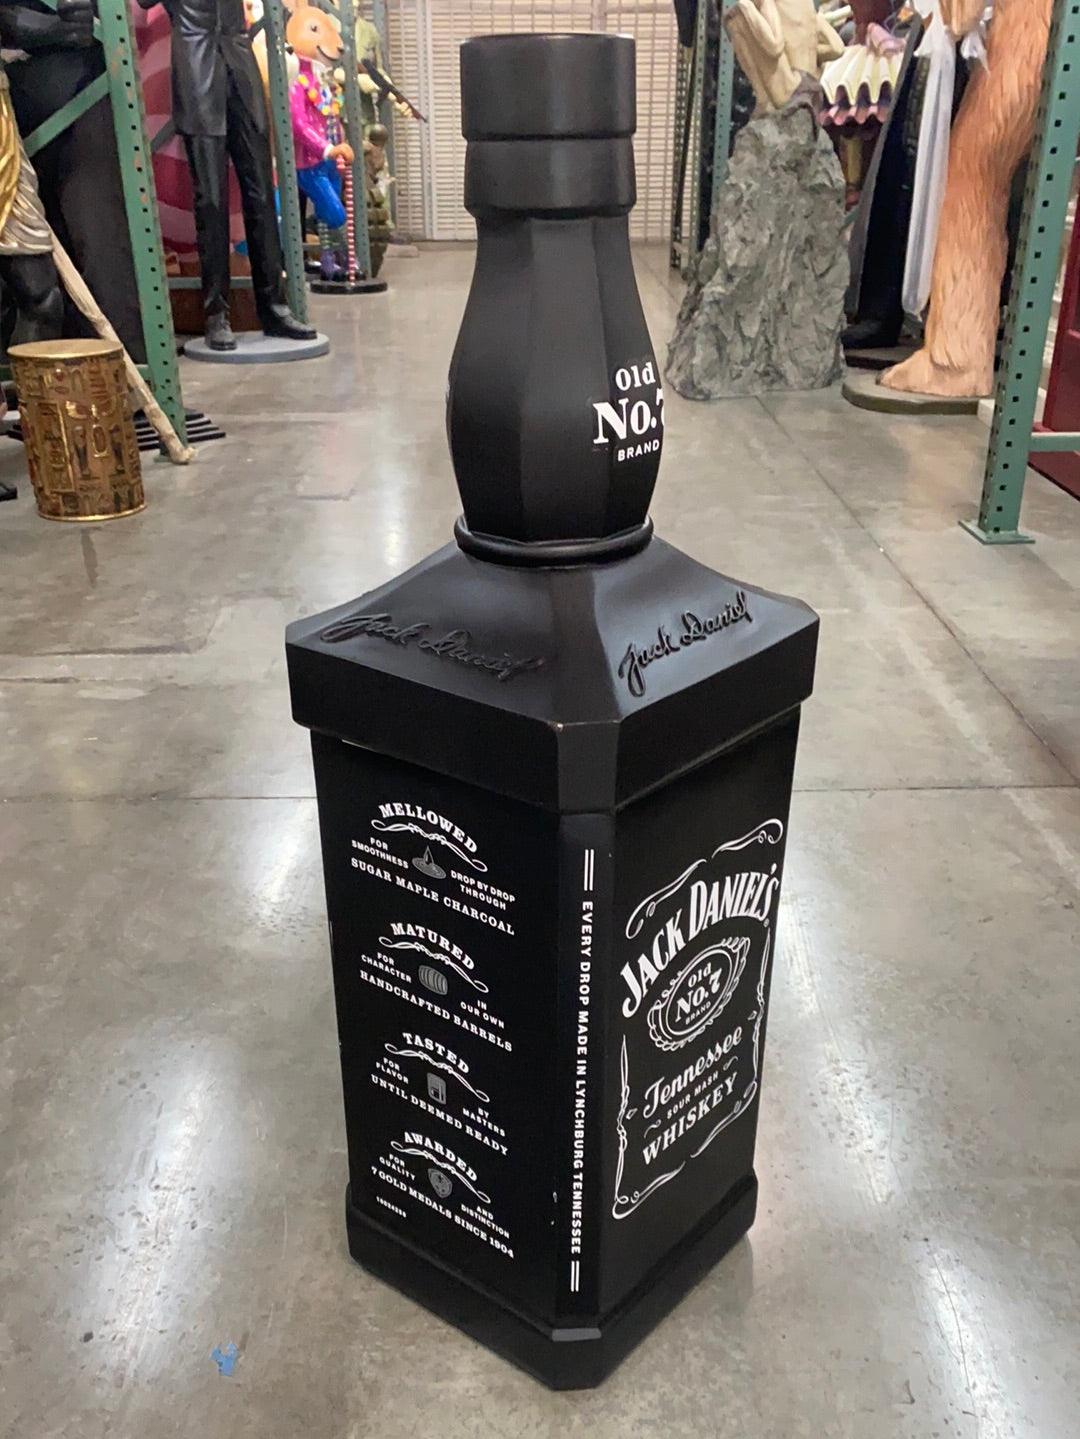 Jack Daniels Bottle Over Sized Statue